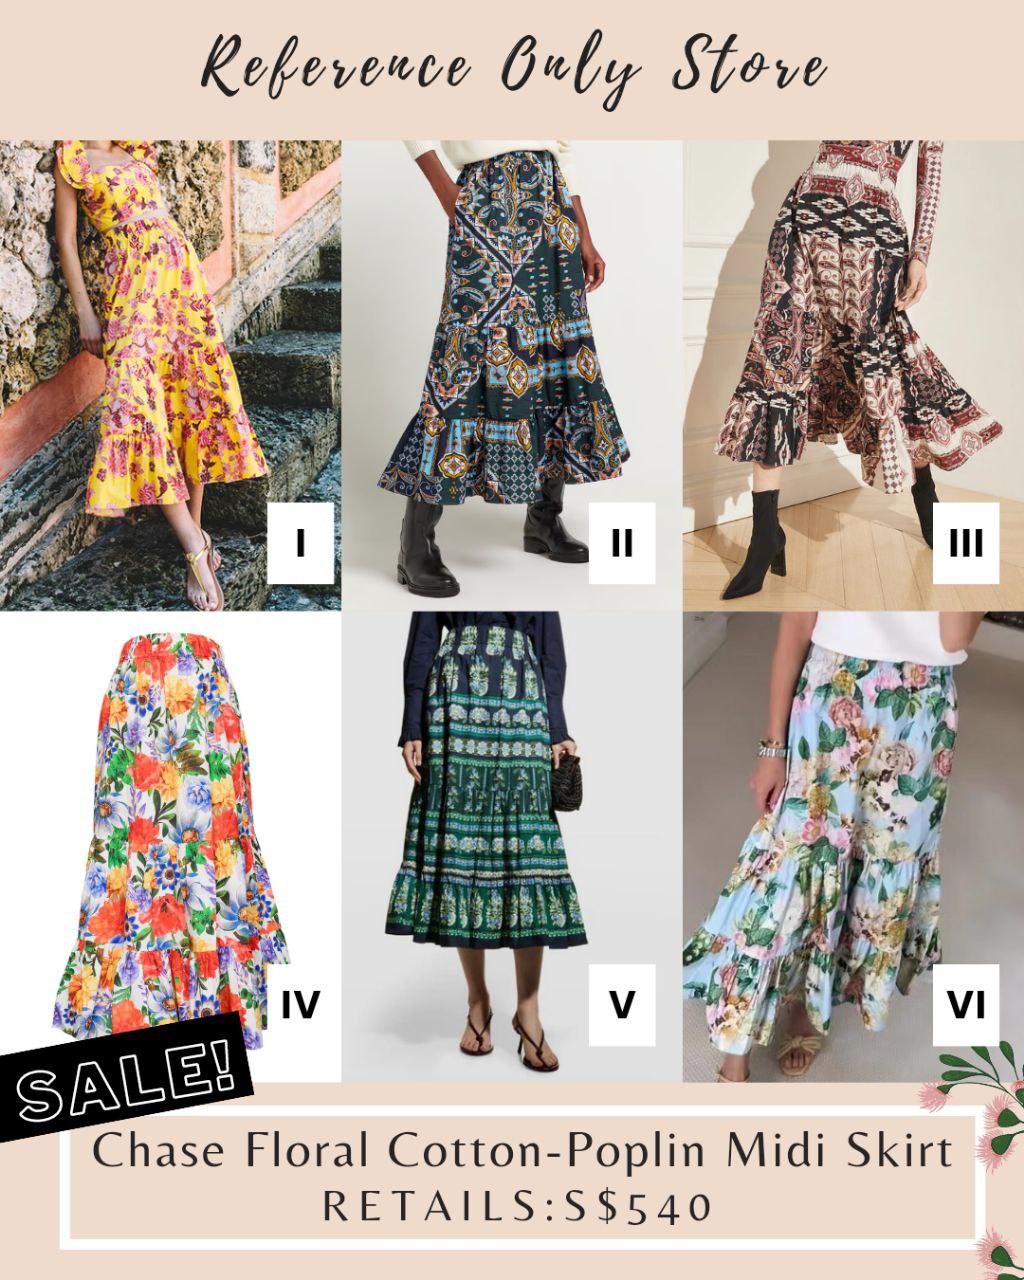 Sale! CC Chase floral cotton poplin midi skirt